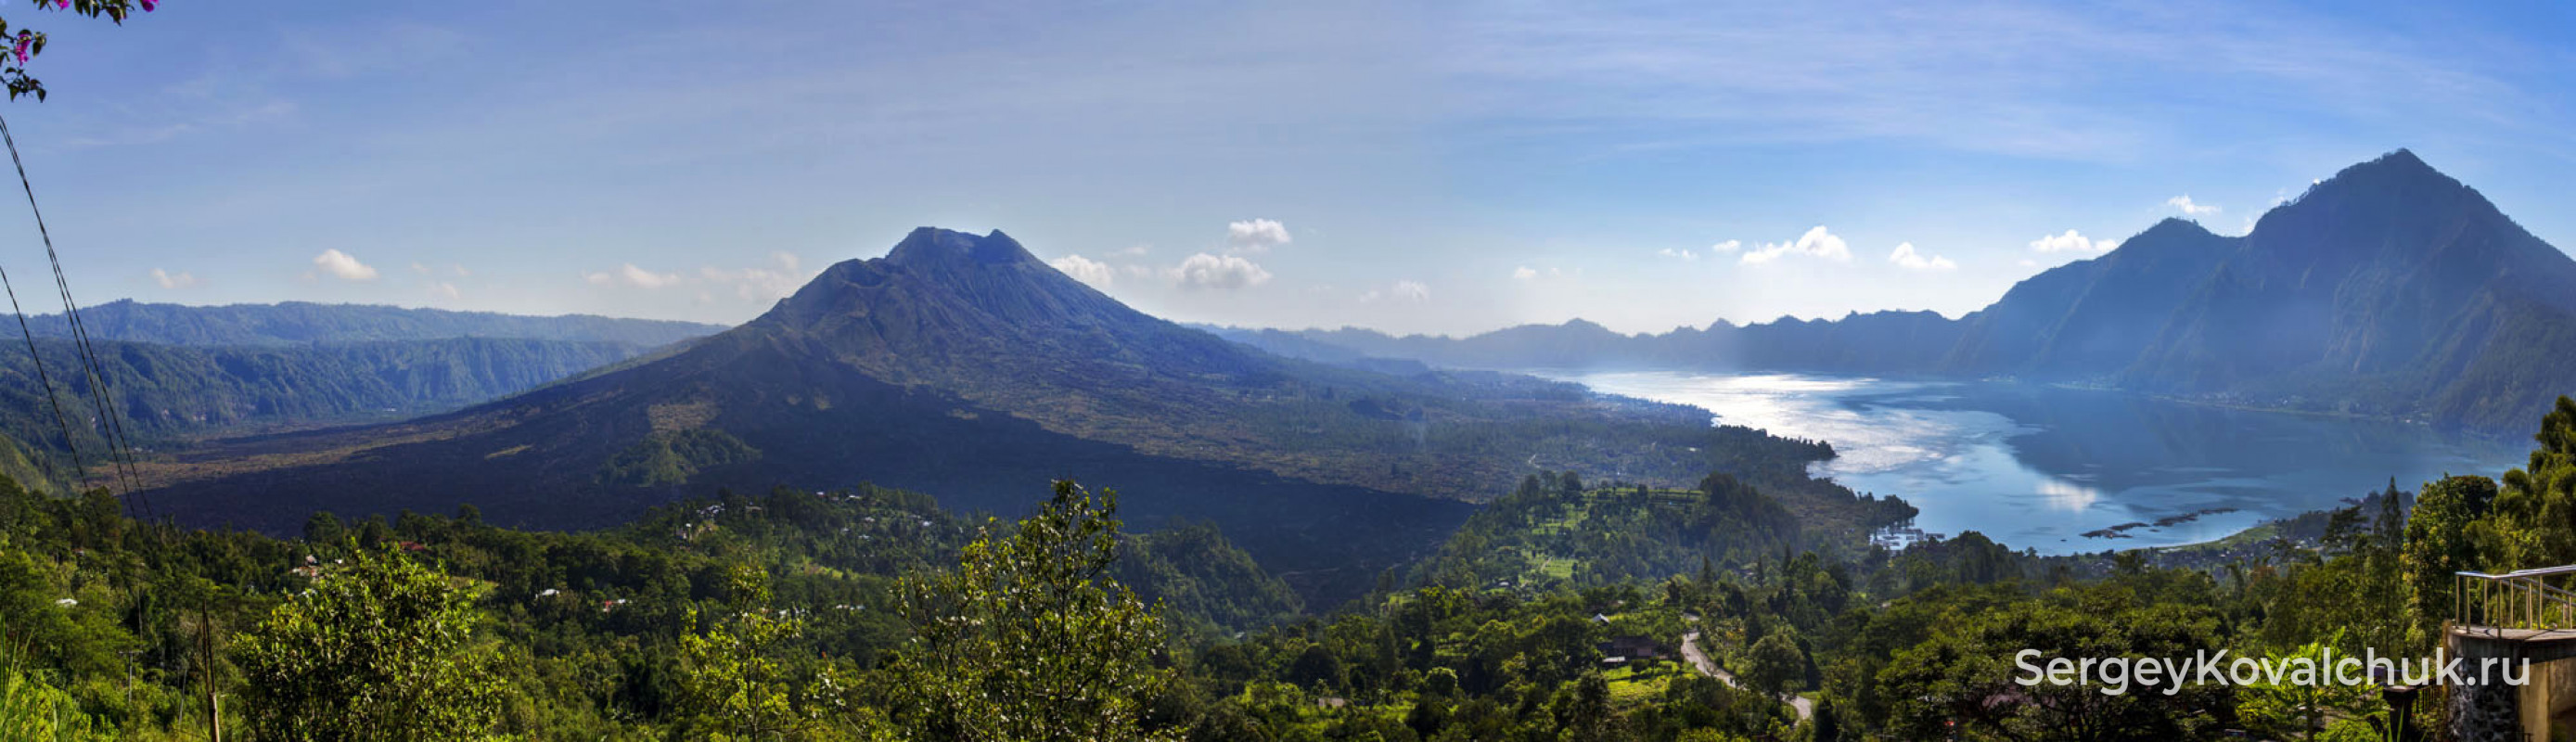 Вид на вулкан Батур и озеро